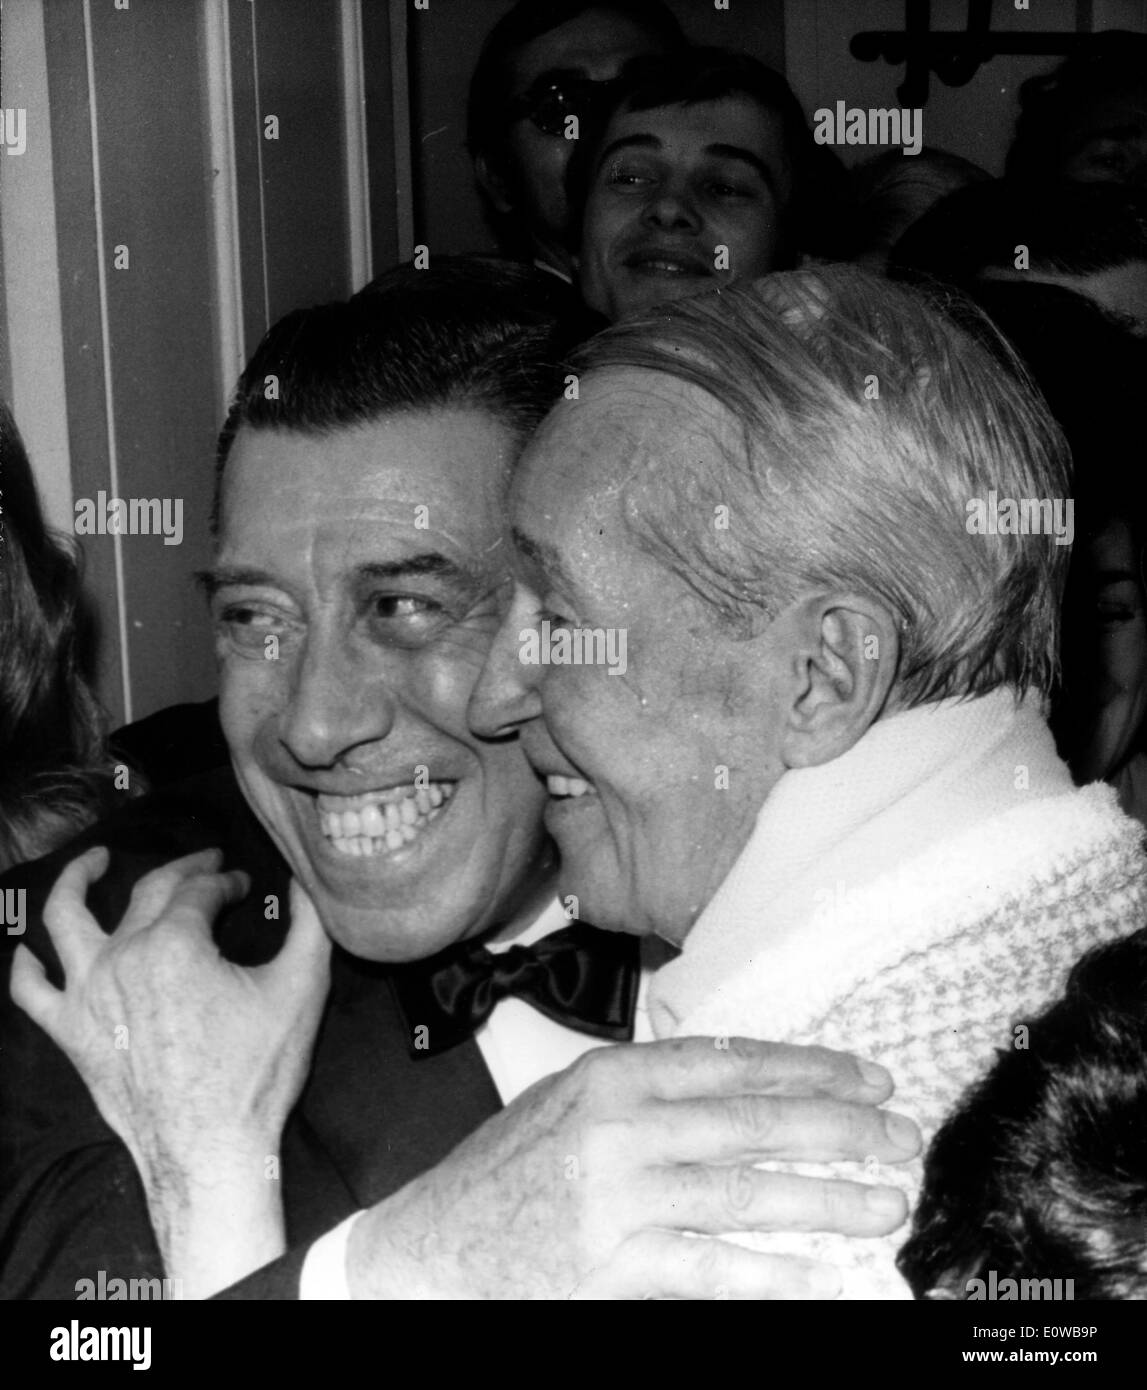 Maurice Chevalier et les acteurs Fernandel hugging Banque D'Images